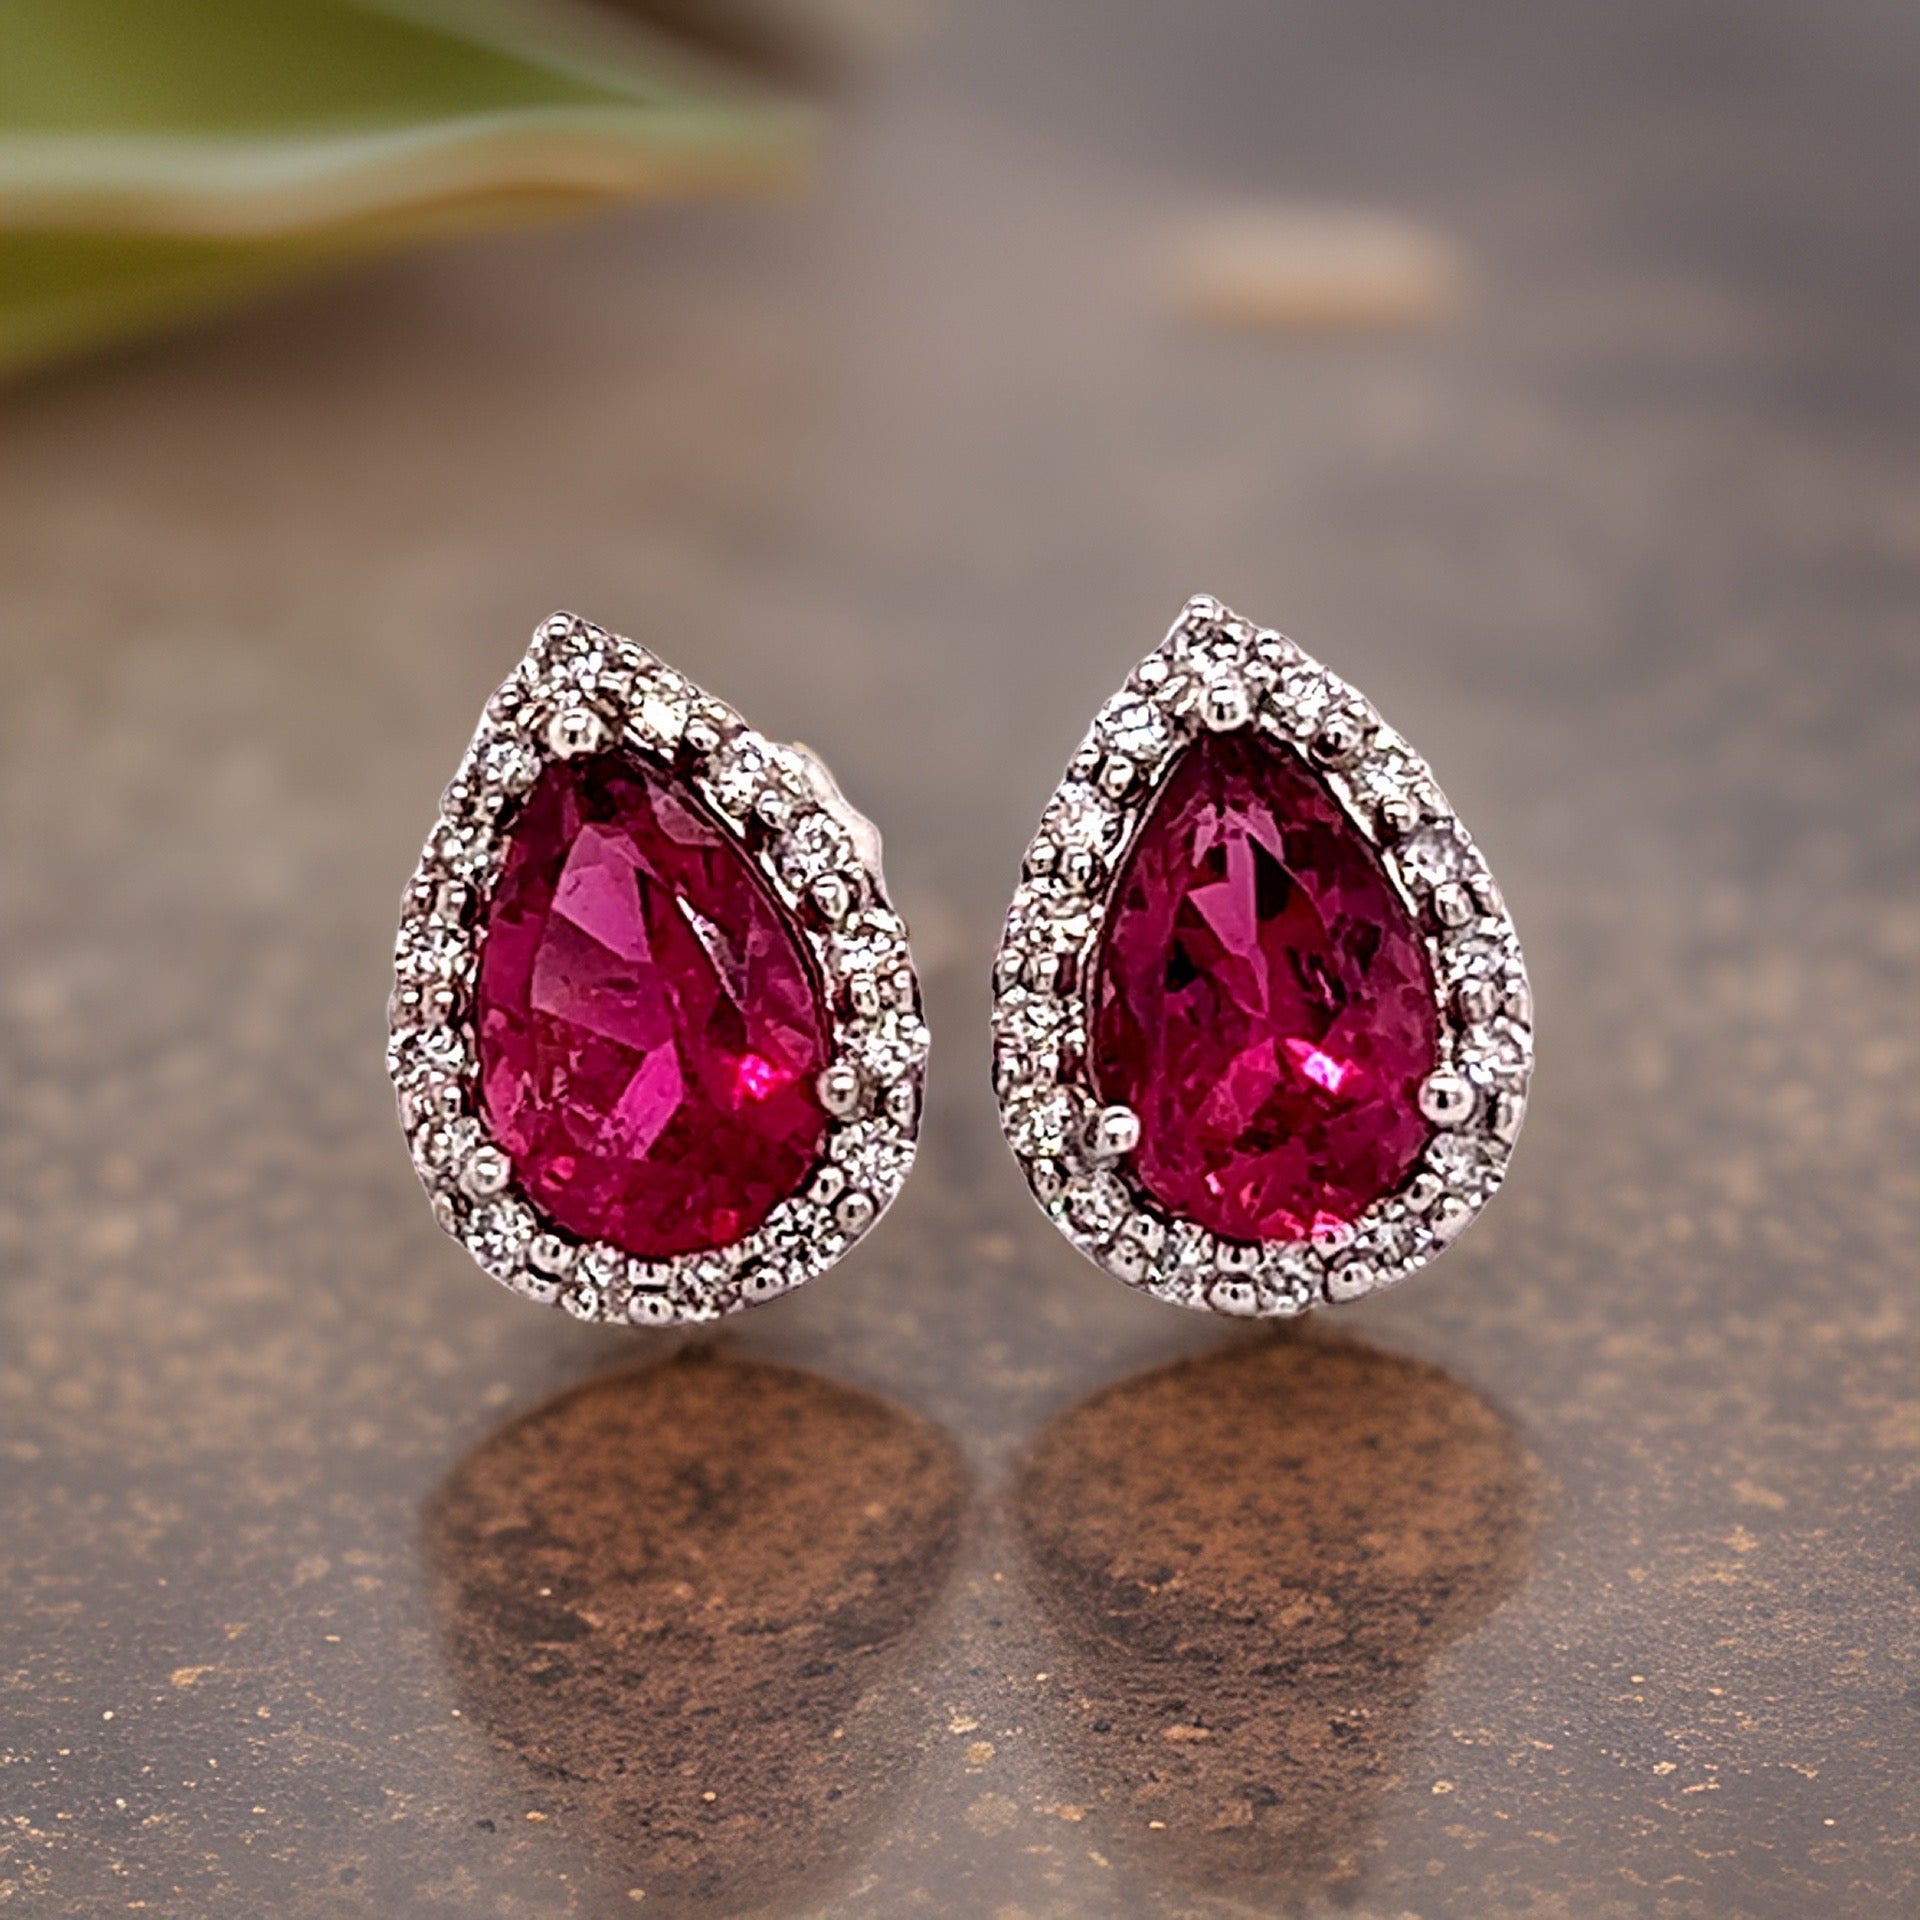 Natural Pink Tourmaline Diamond Stud Earrings 14k W Gold 2.02 TCW Certified $3,950 211890 - Certified Fine Jewelry